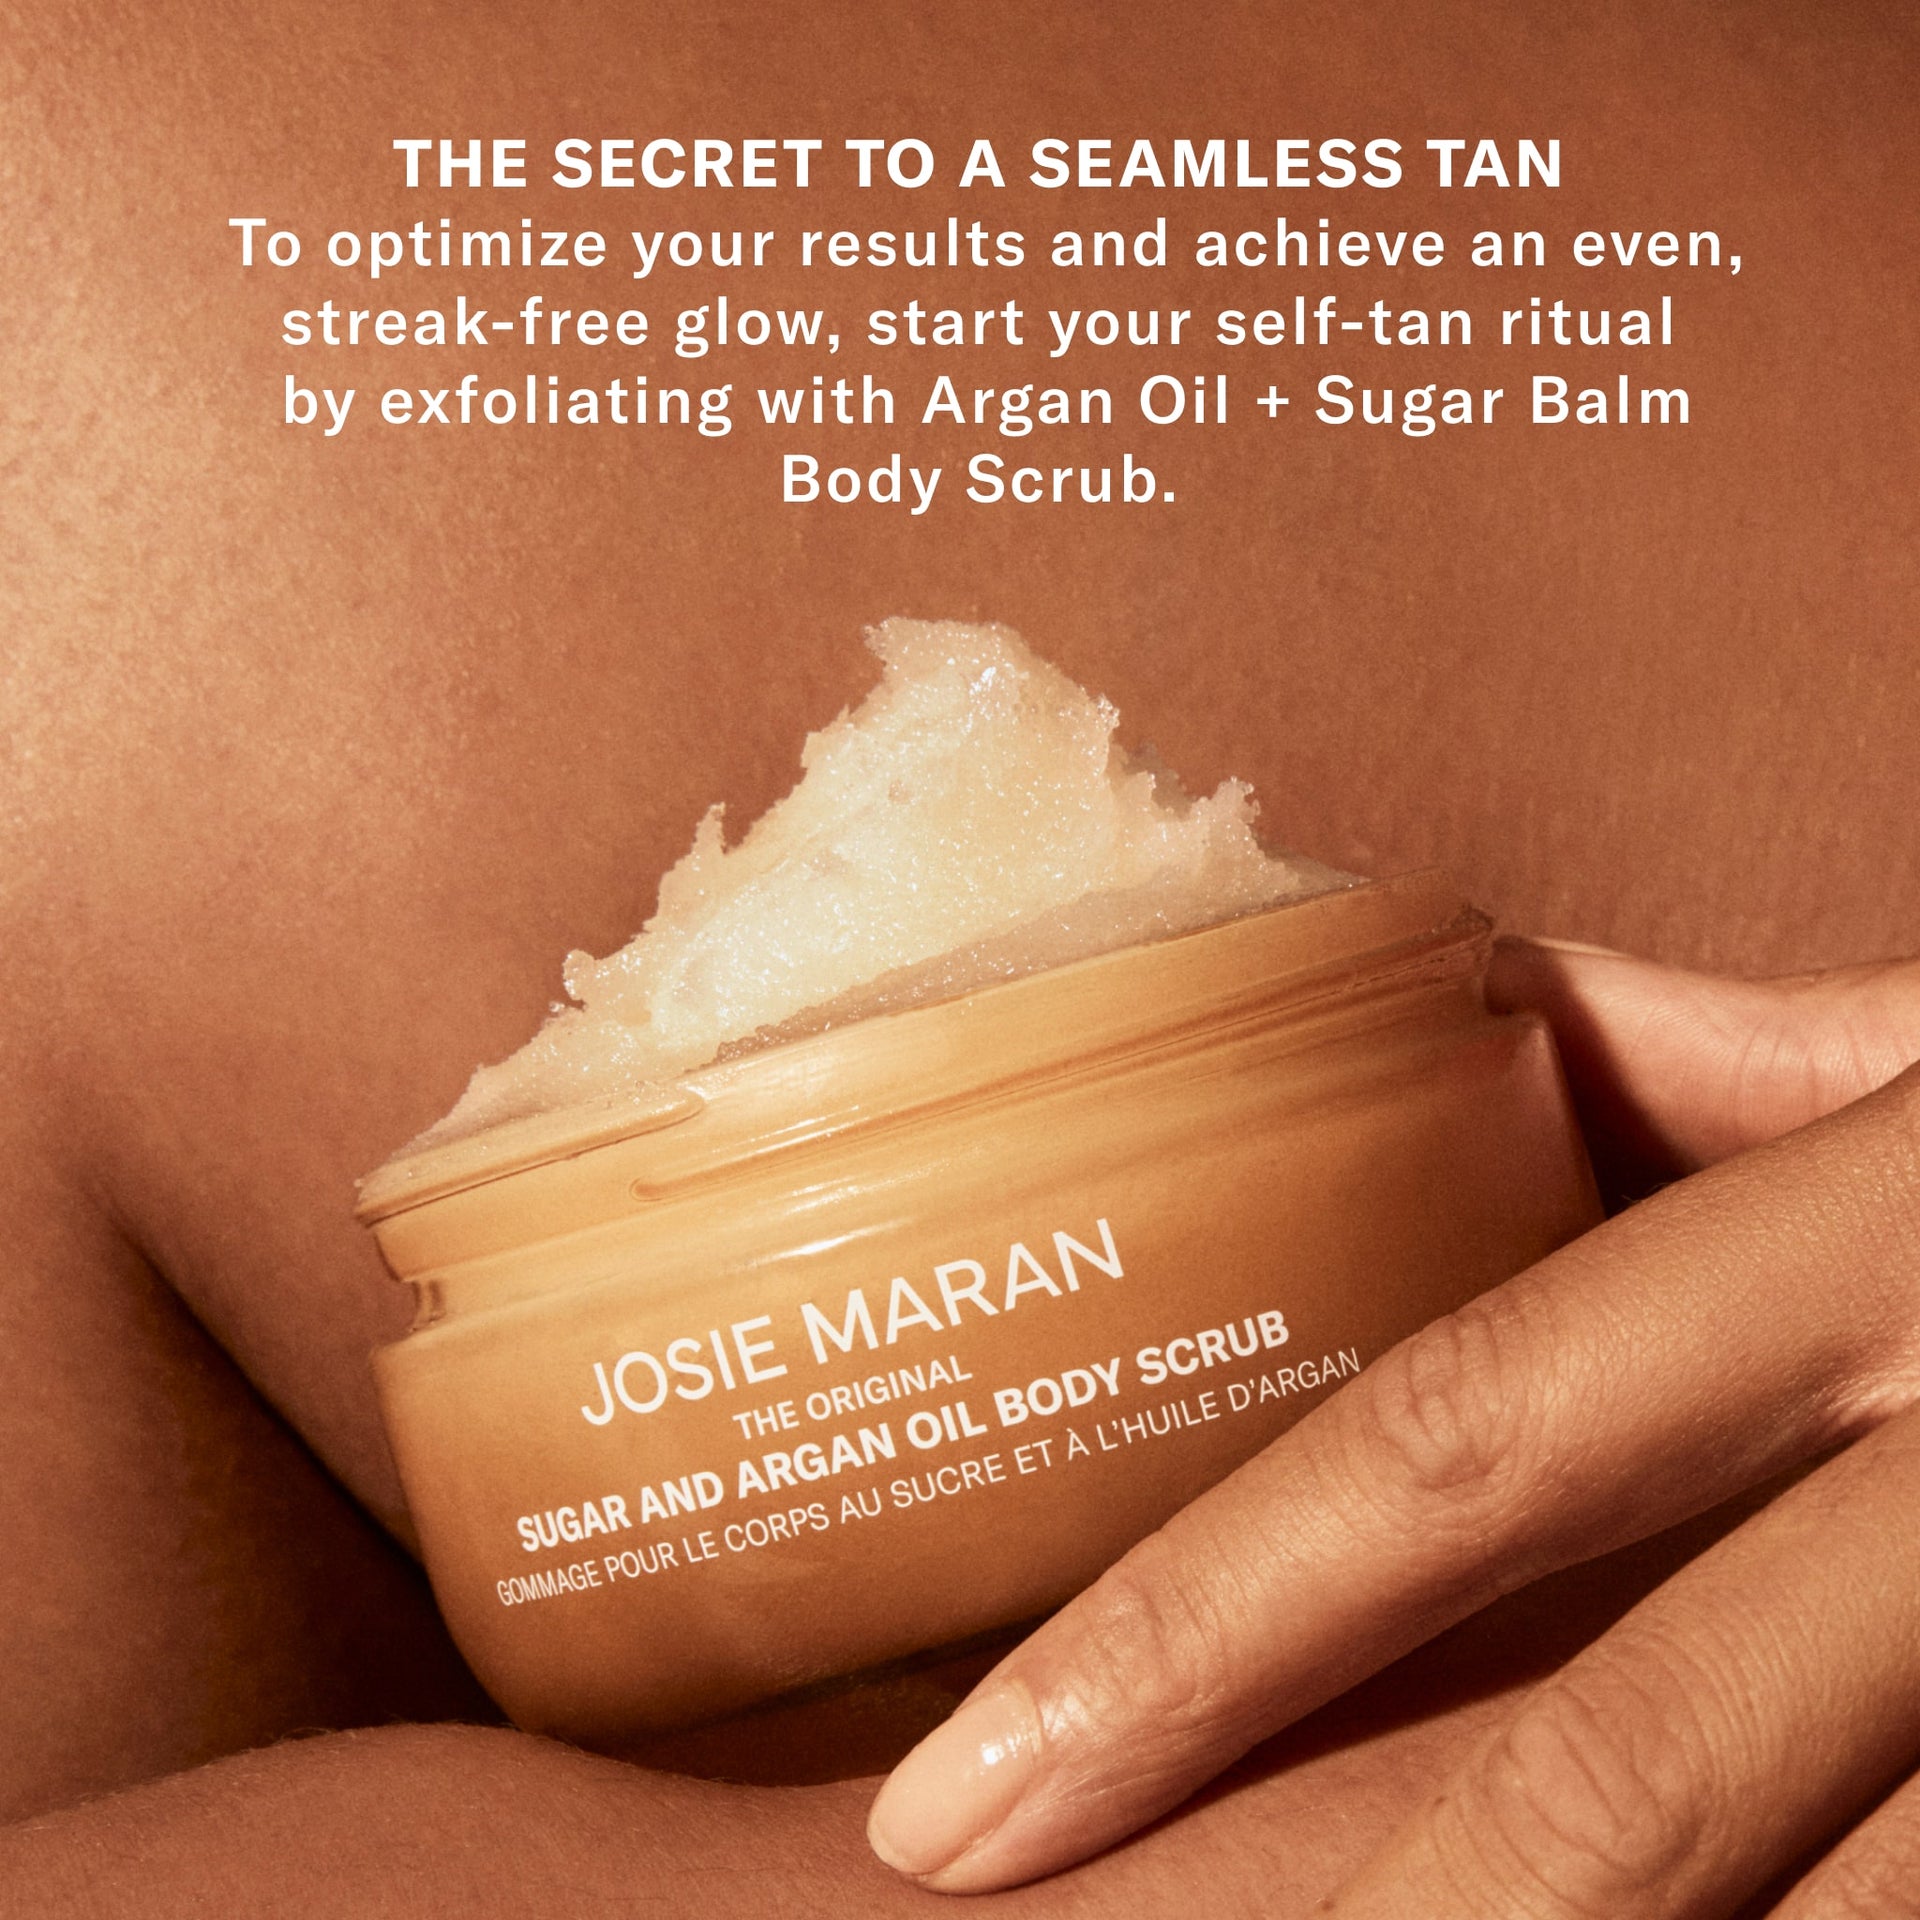 The Secret to a Seamless Tan. Exfoliate with Sugar and Argan Oil Body Scrub